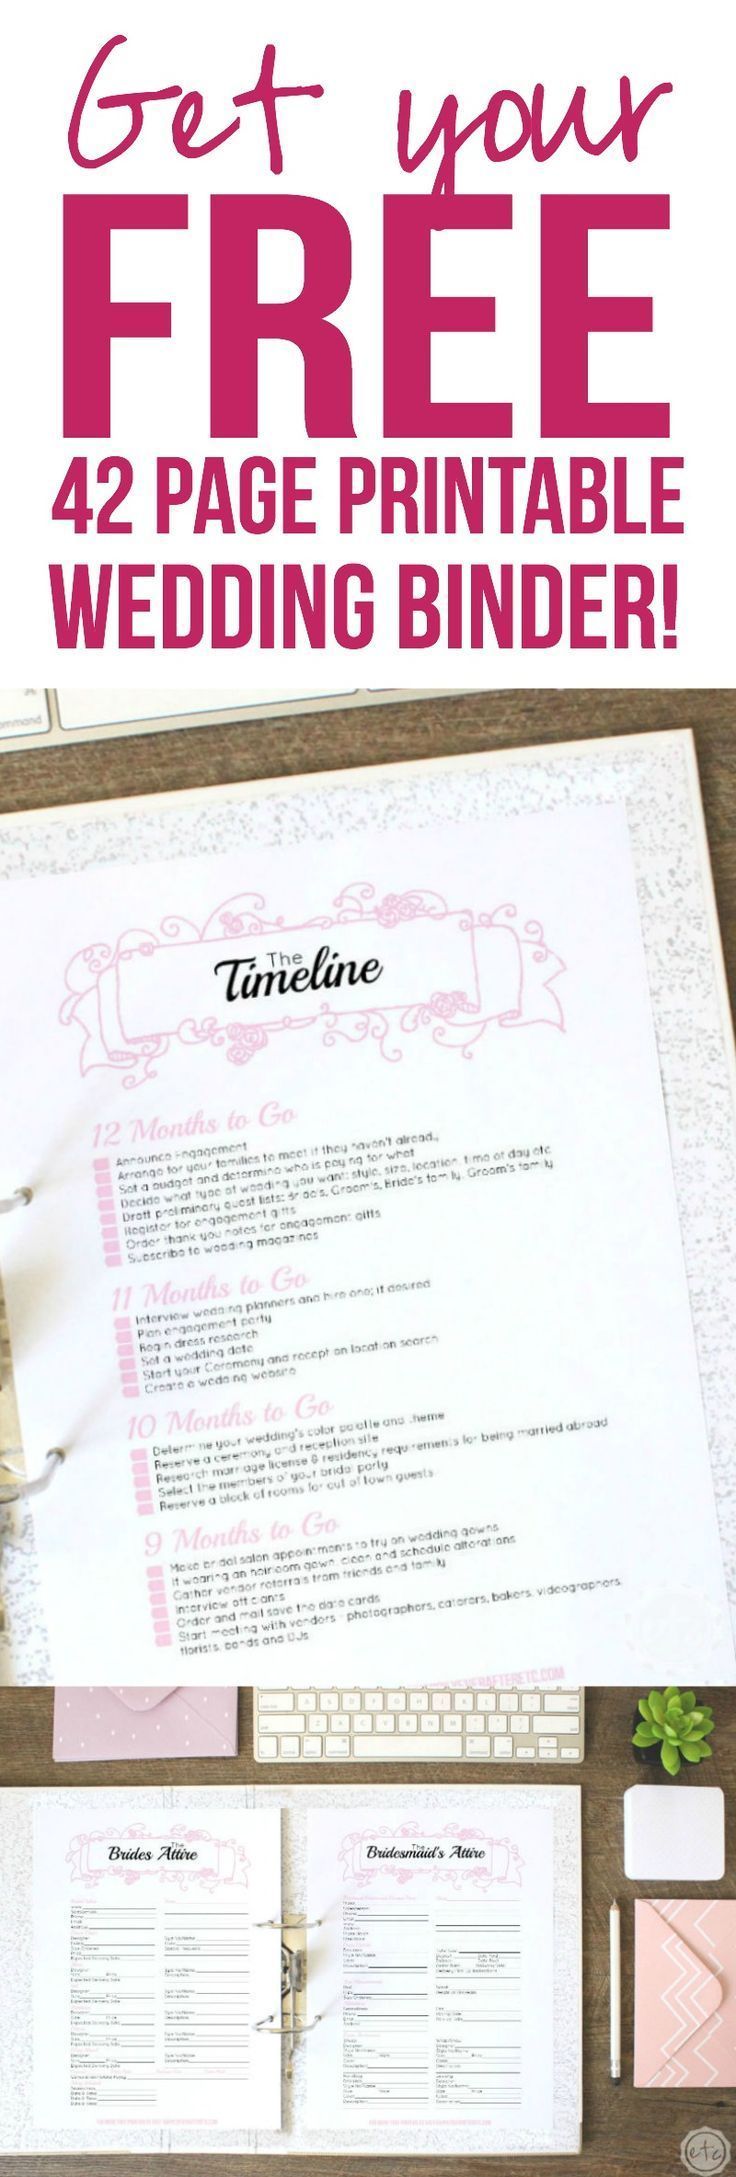 Get Your FREE Wedding Binder! - Get Your FREE Wedding Binder! -   15 diy Wedding binder ideas